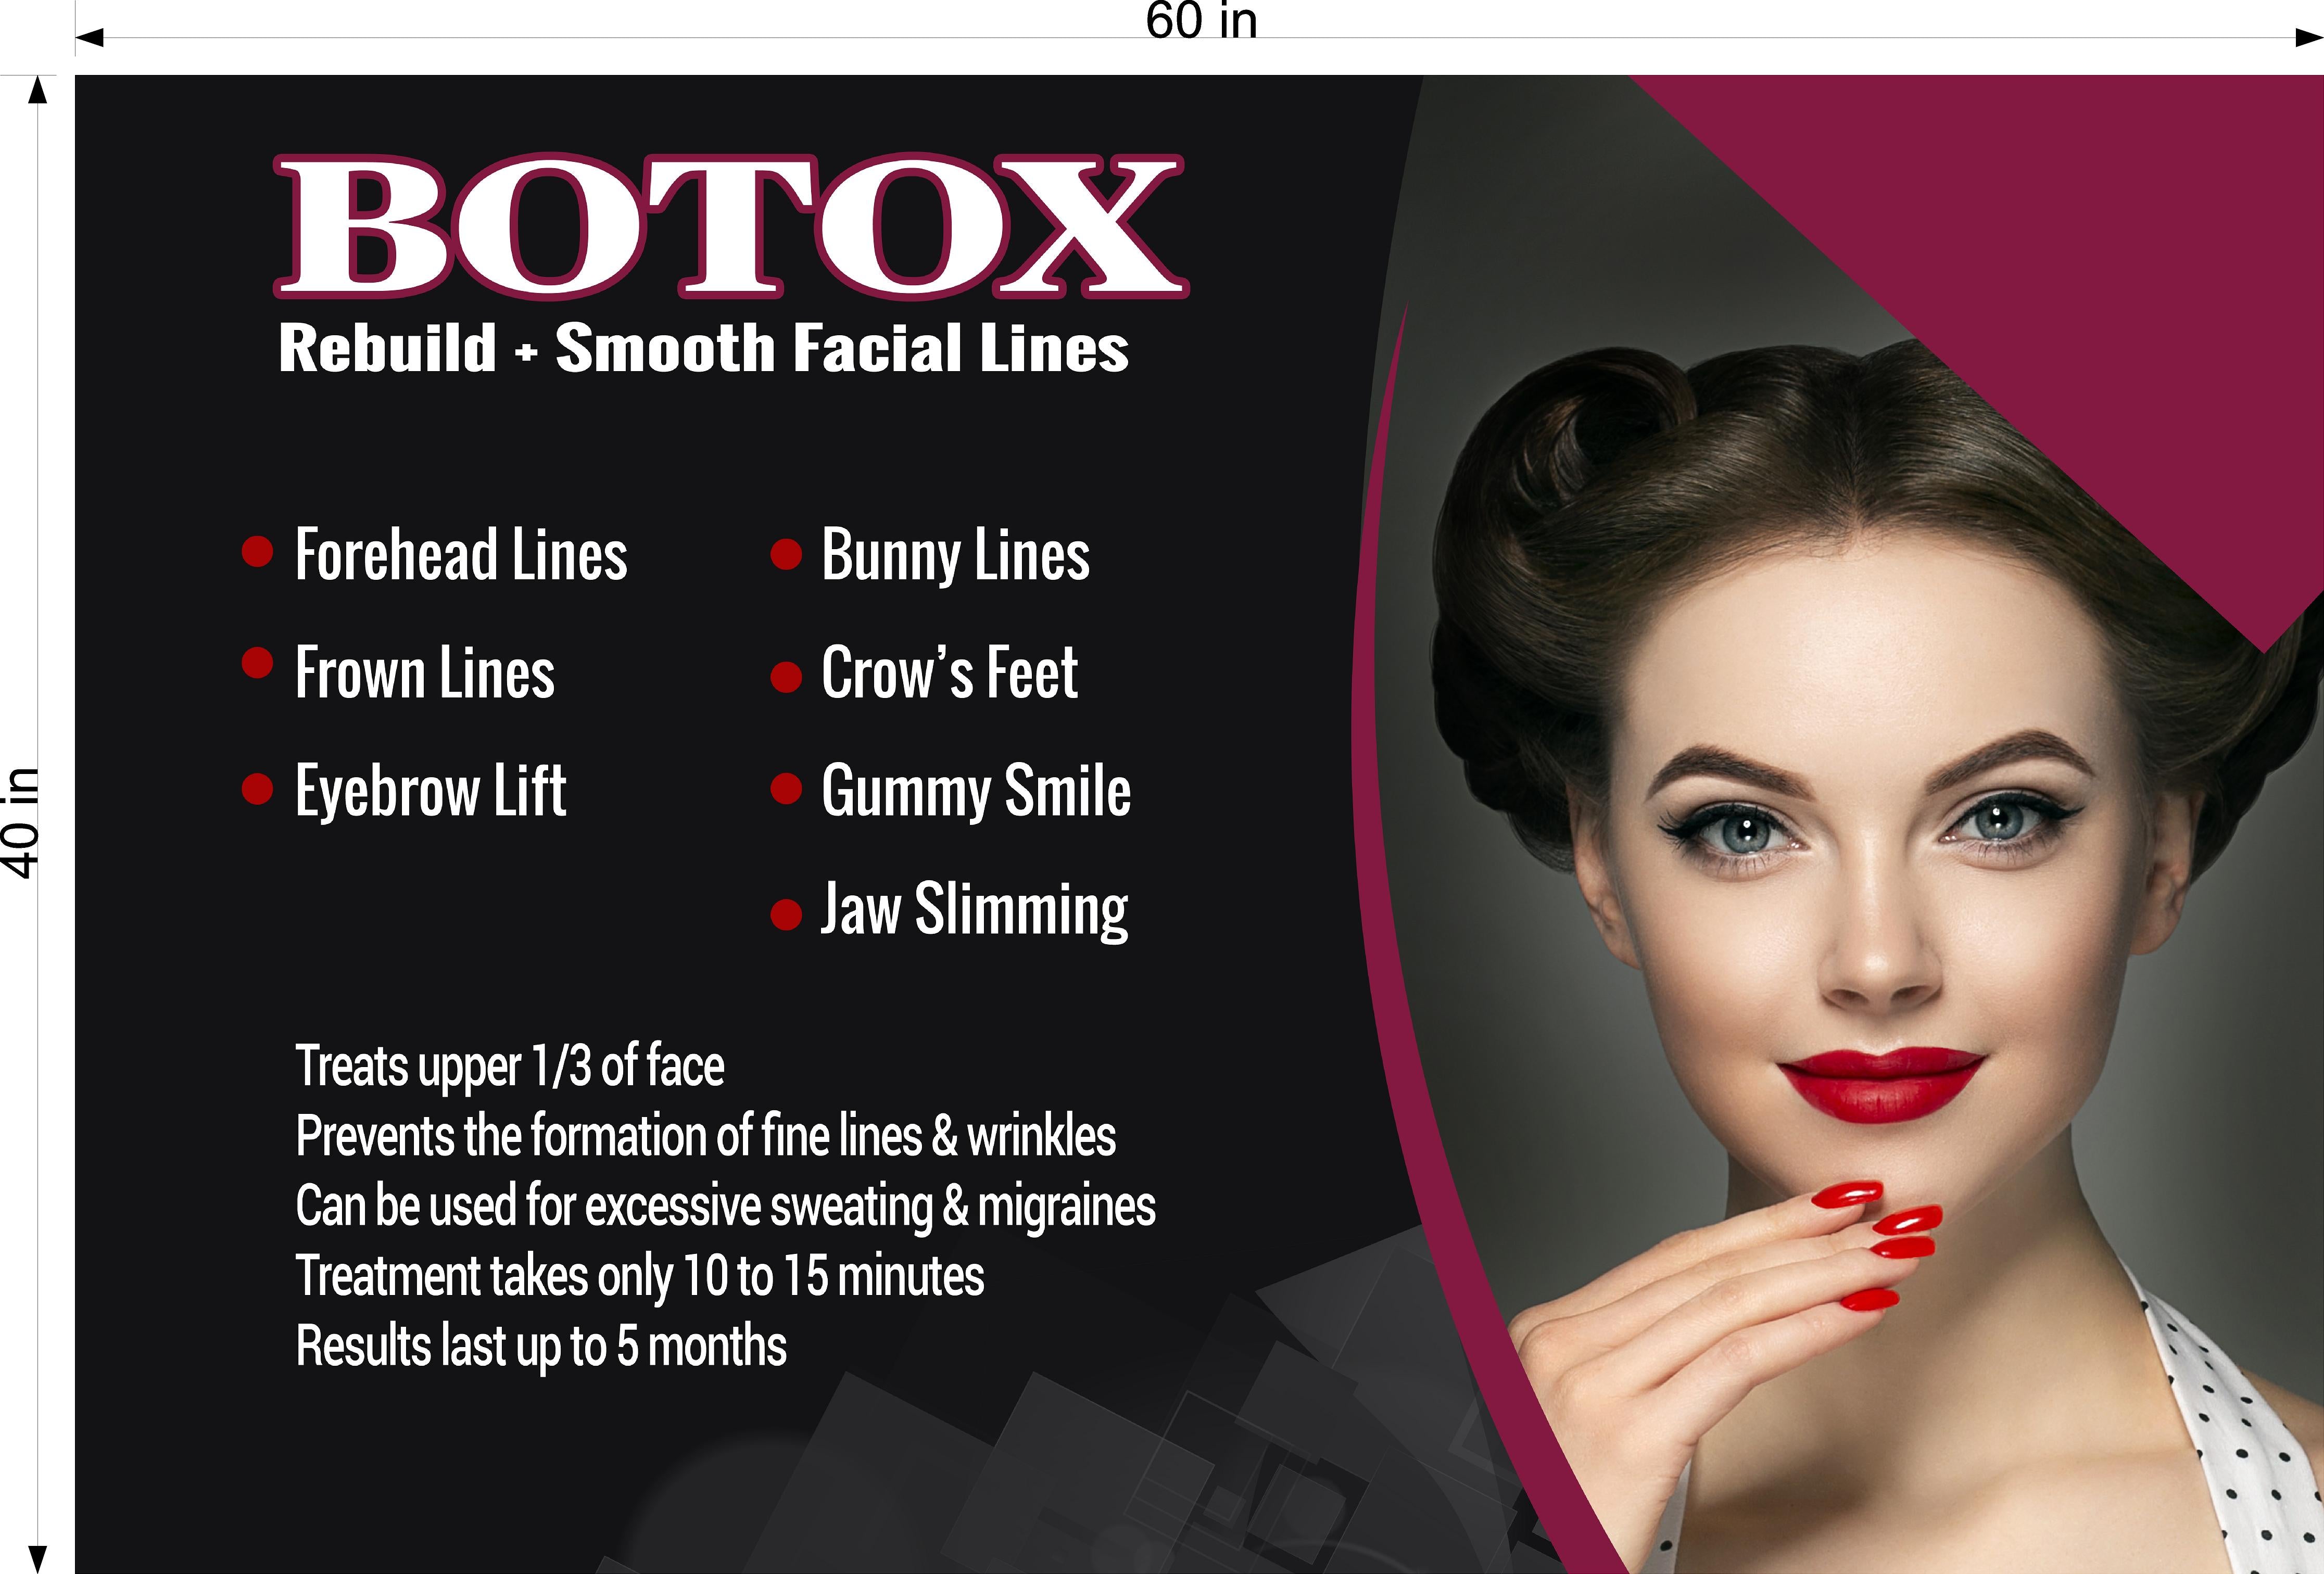 Botox 20 Perforated Mesh One Way Vision See-Through Window Vinyl Poster Sign Horizontal